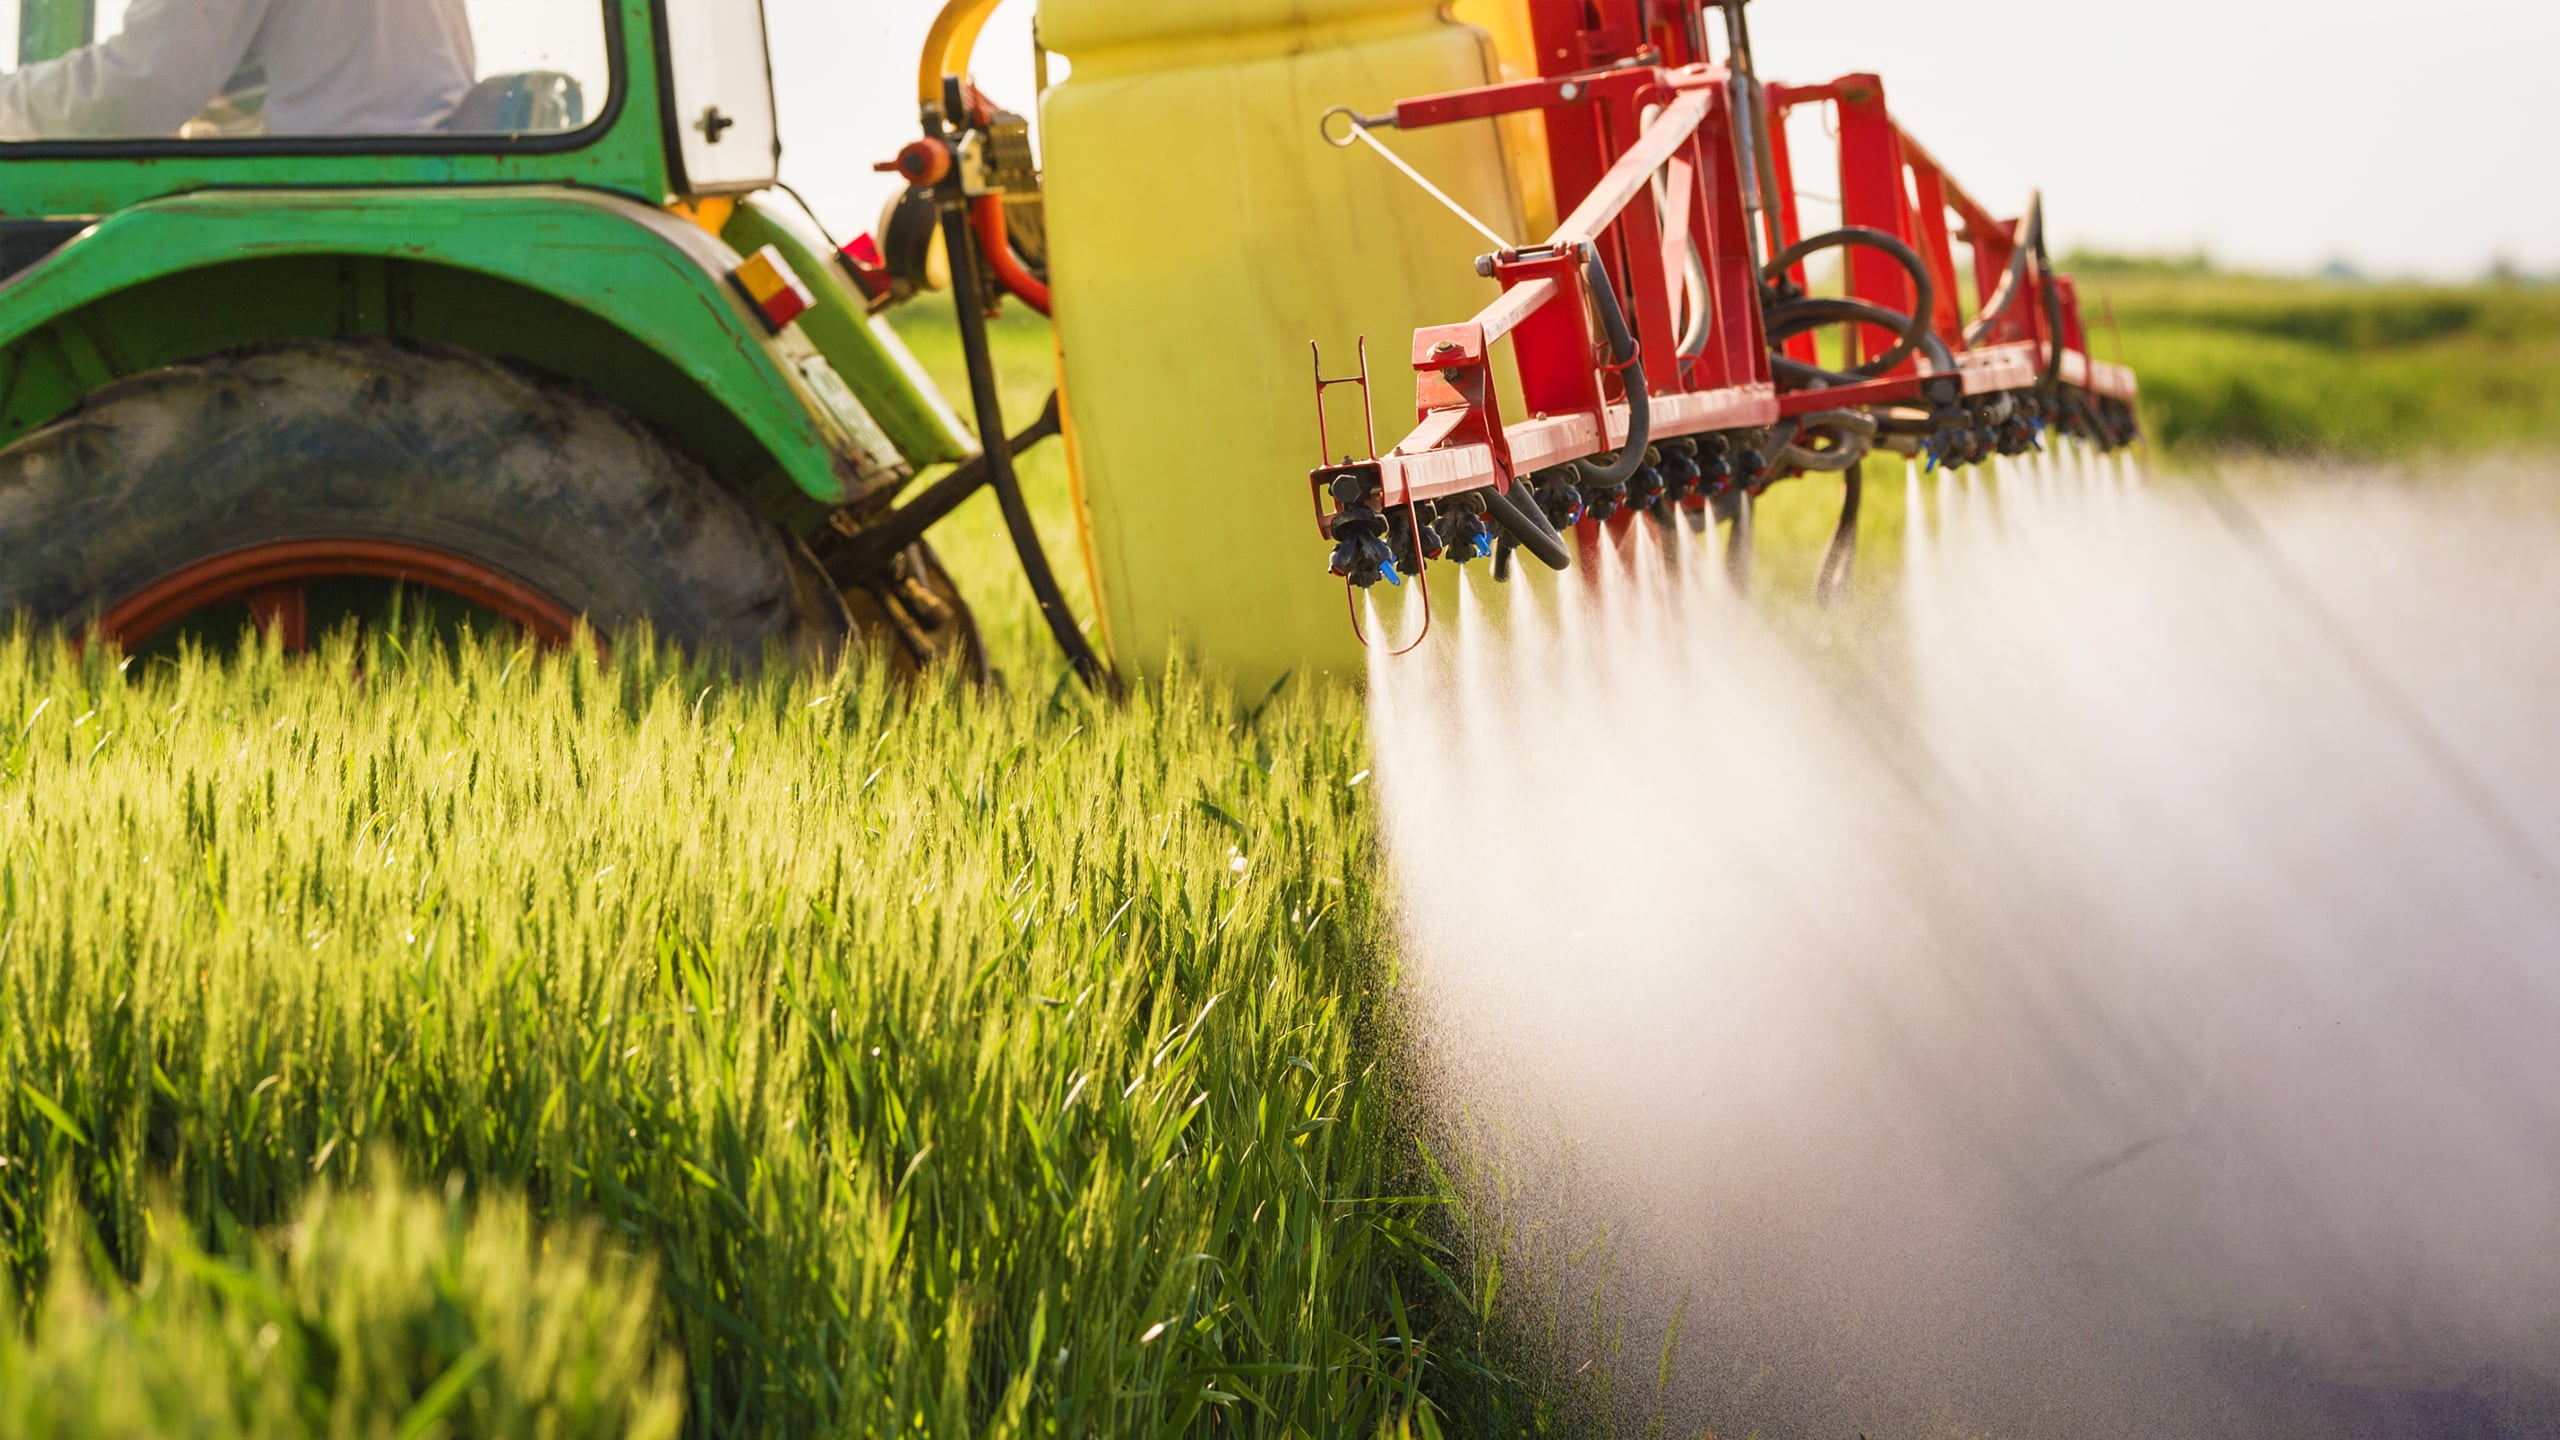 Tractor spraying fertiliser product on wheat field